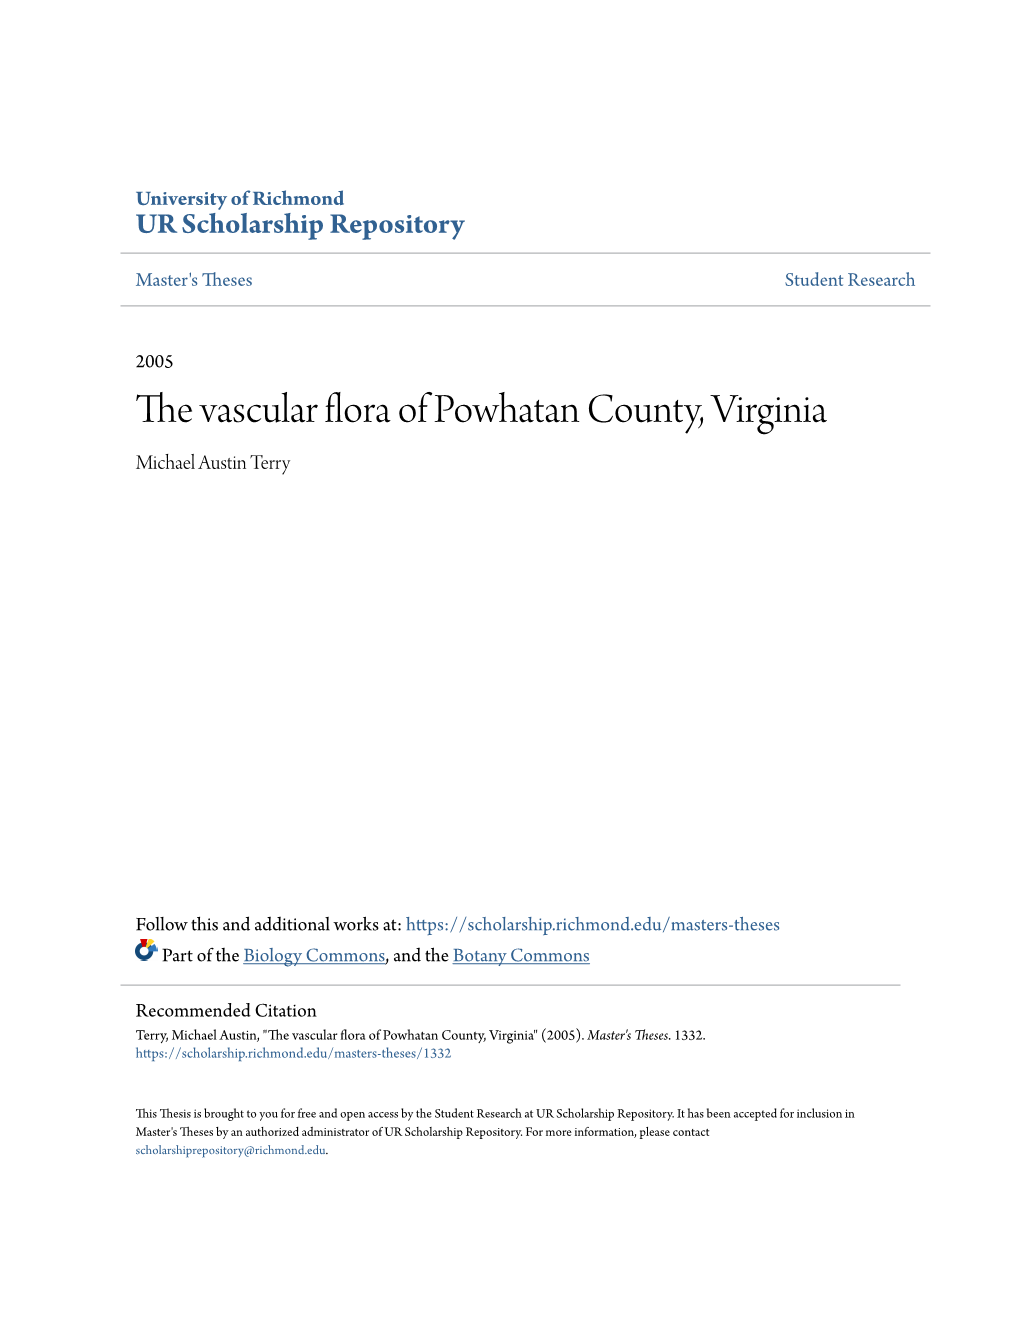 The Vascular Flora of Powhatan County, Virginia Michael Austin Terry